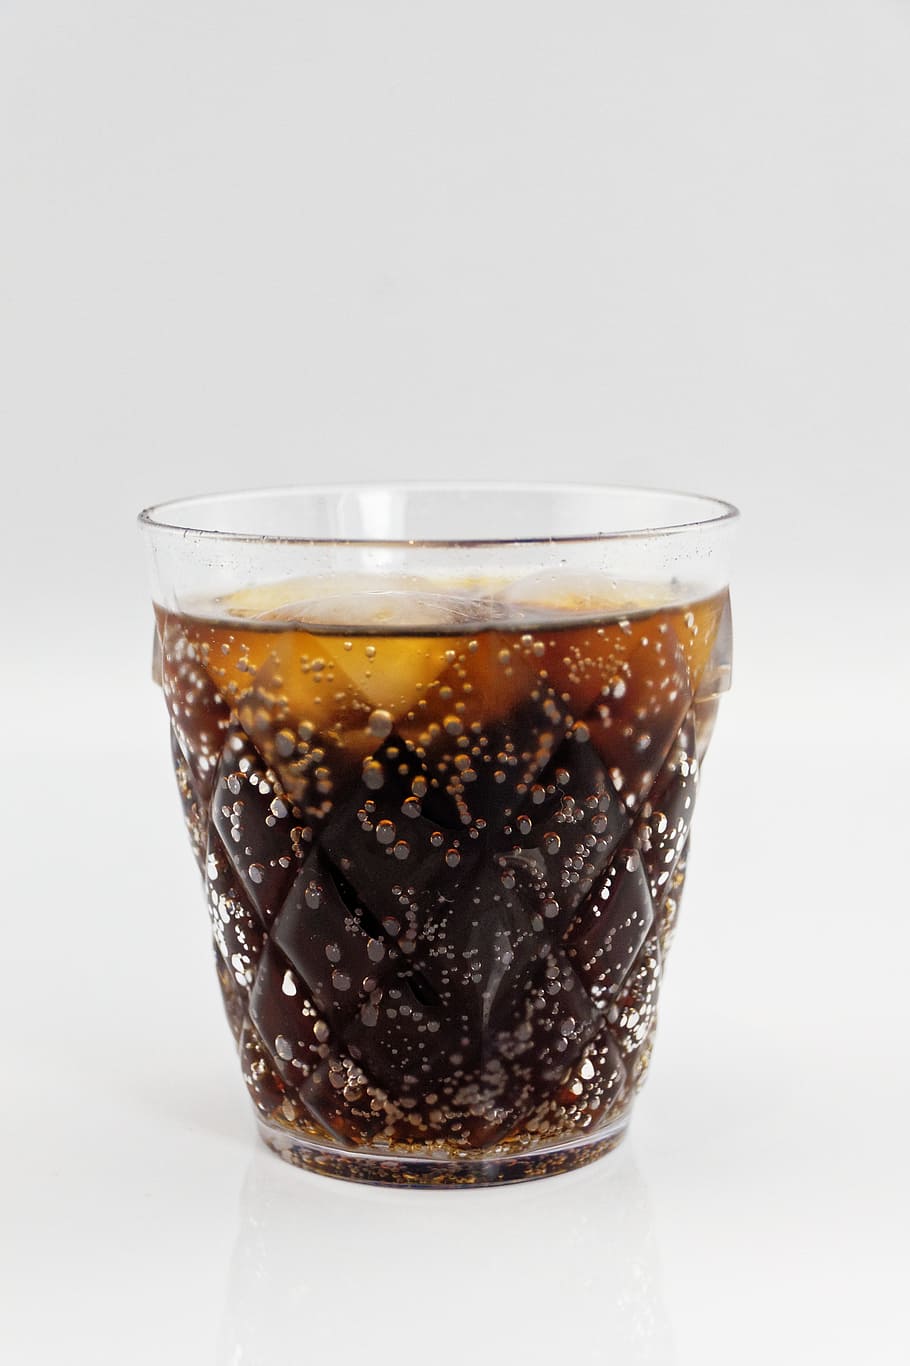 cola inside clear drinking glass, erfrischungsgetränk, refreshment